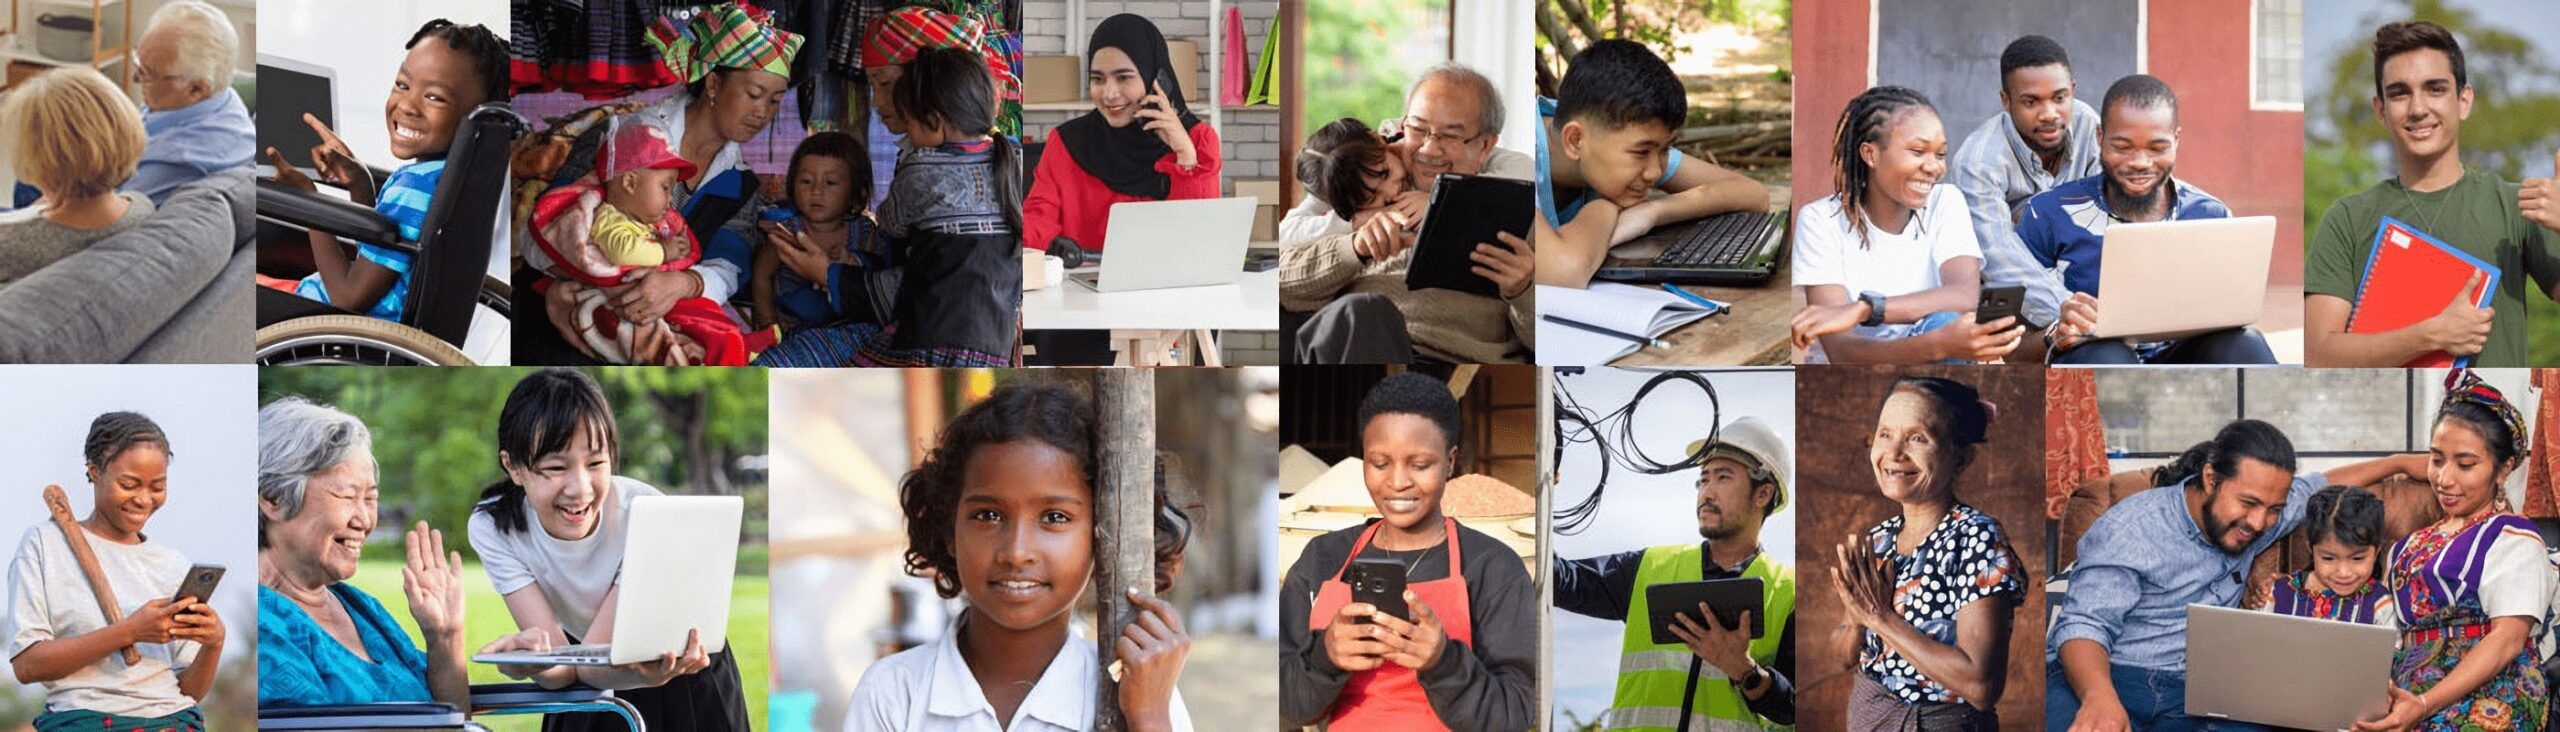 Envisaging inclusive digital economies and societies featured image